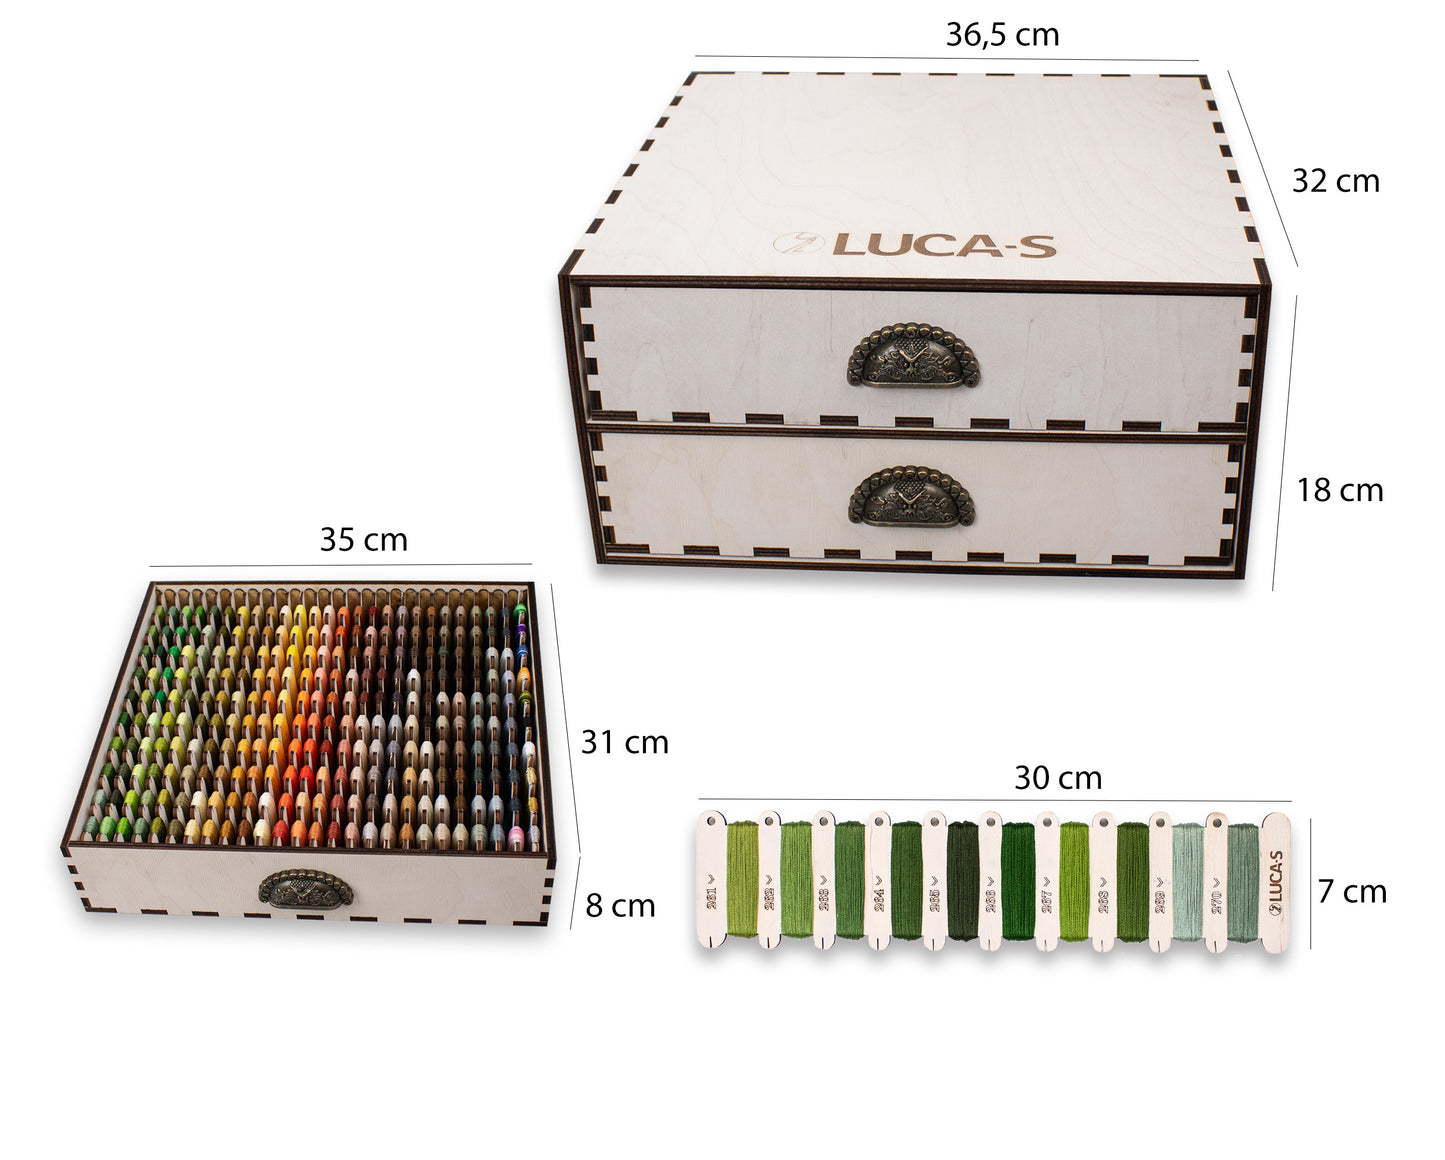 Luca-S Mouline Organizer - OL-02 Organizer Box 2 Luca-S Mouline 520 colors